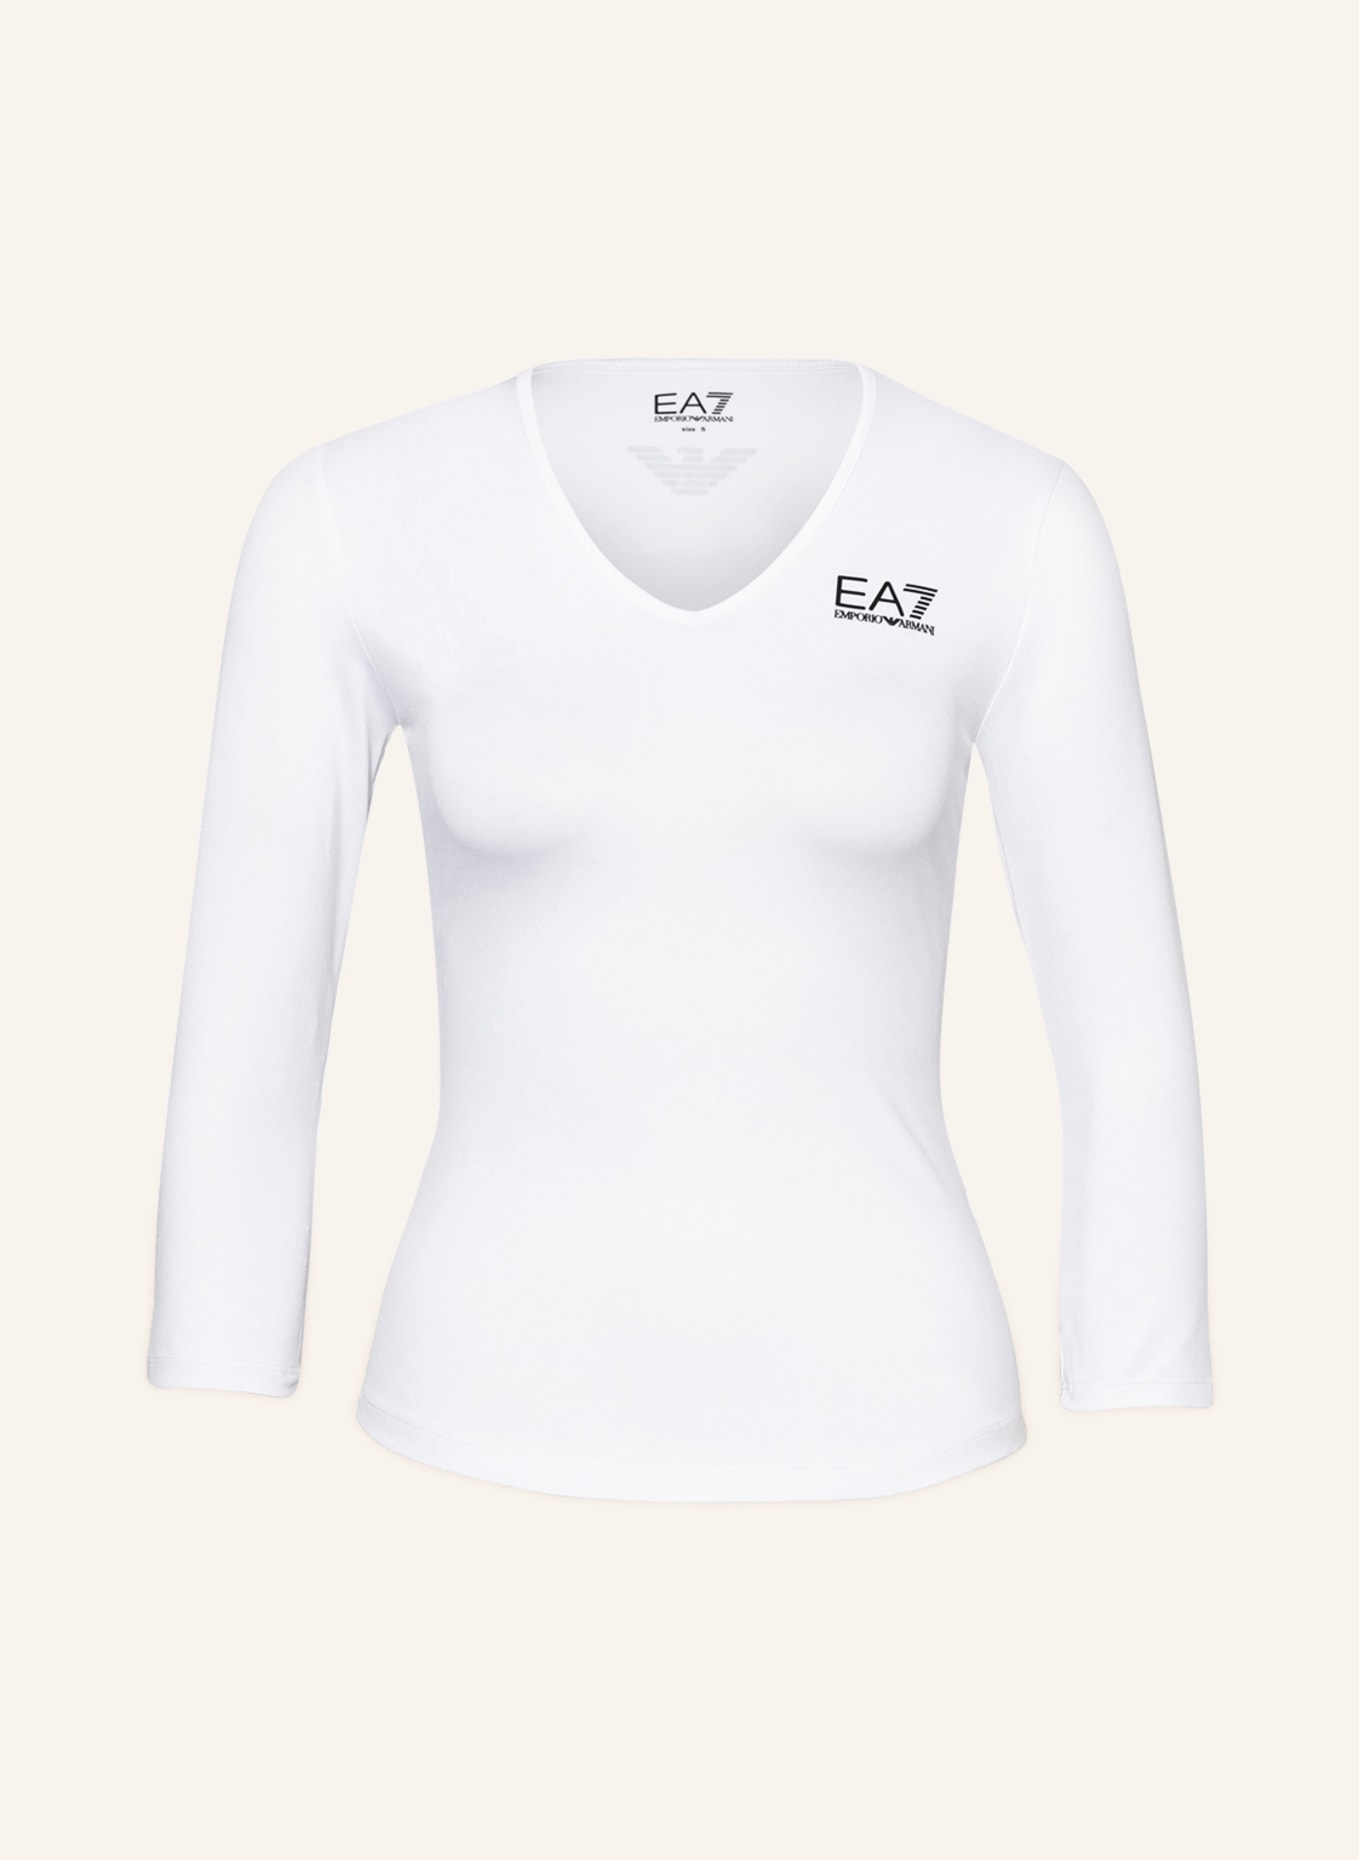 EA7 EMPORIO ARMANI Long Sleeve Shirt In White